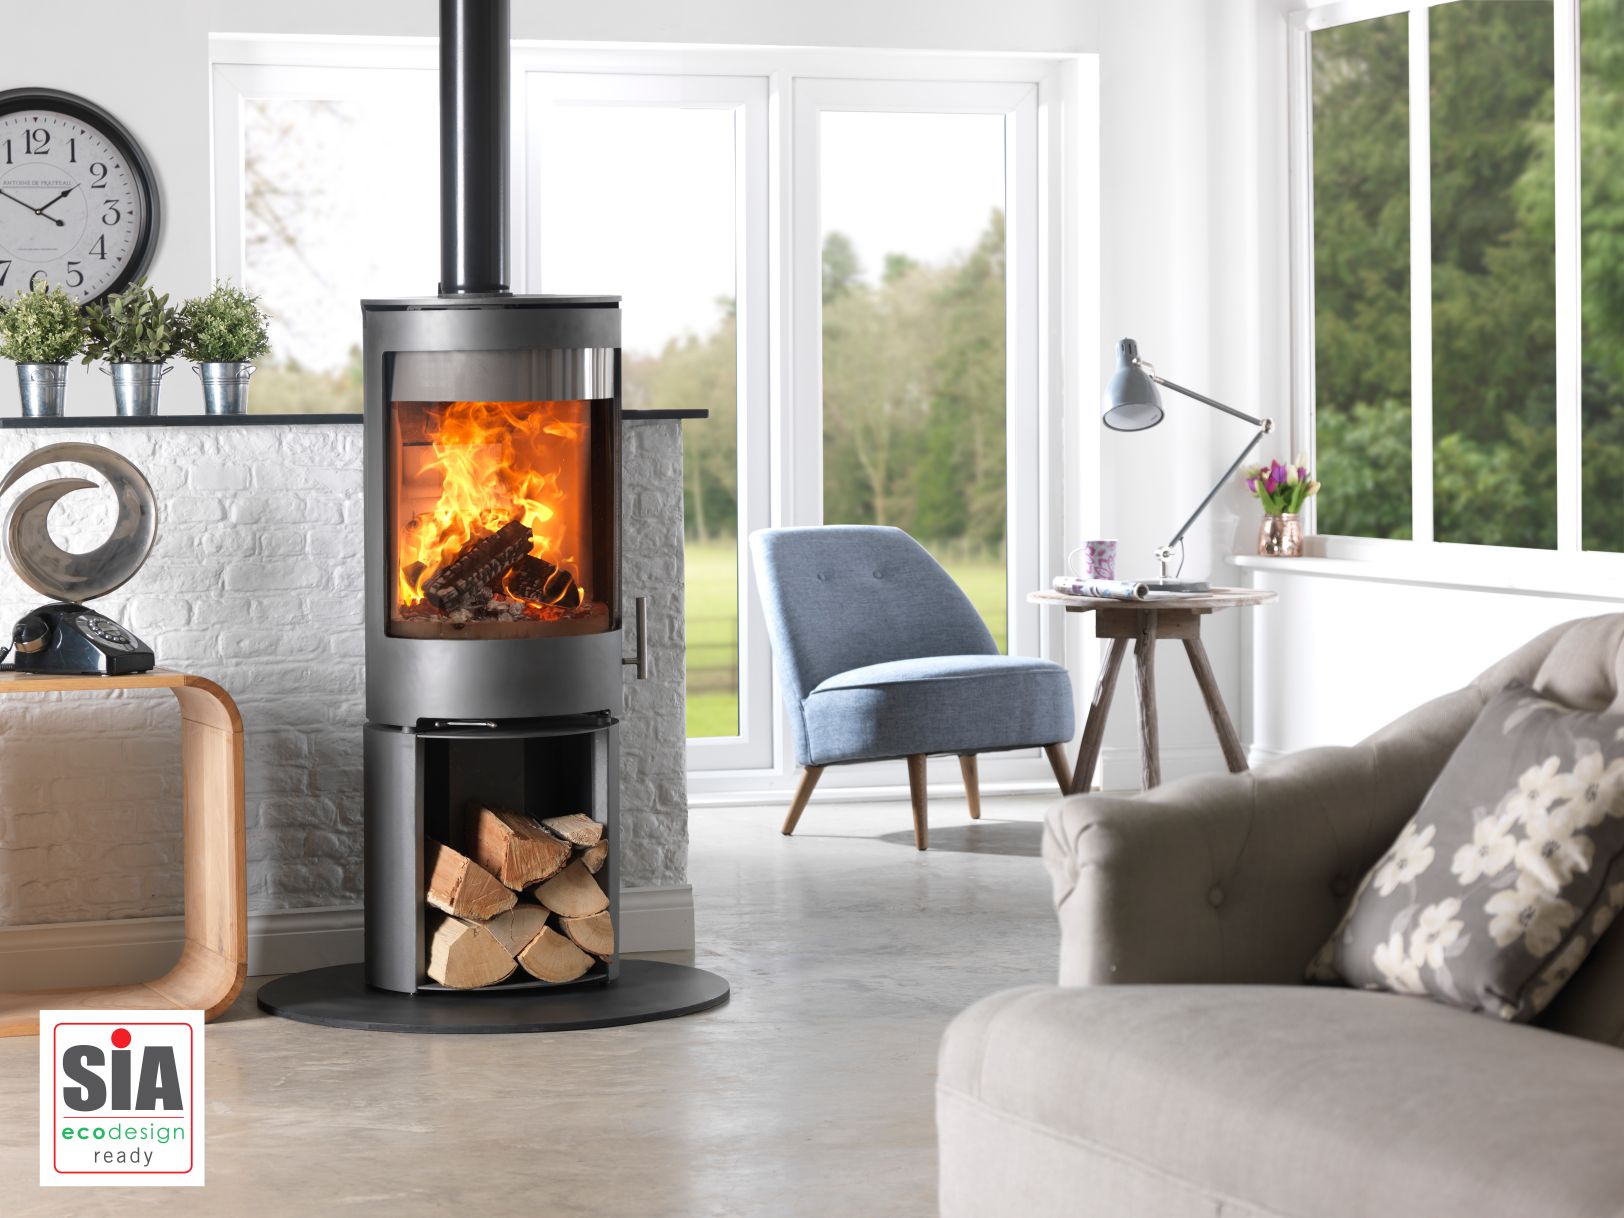 Purevision Log Burner, Wood Burner, Ecodesign Ready Stove, Fireplace